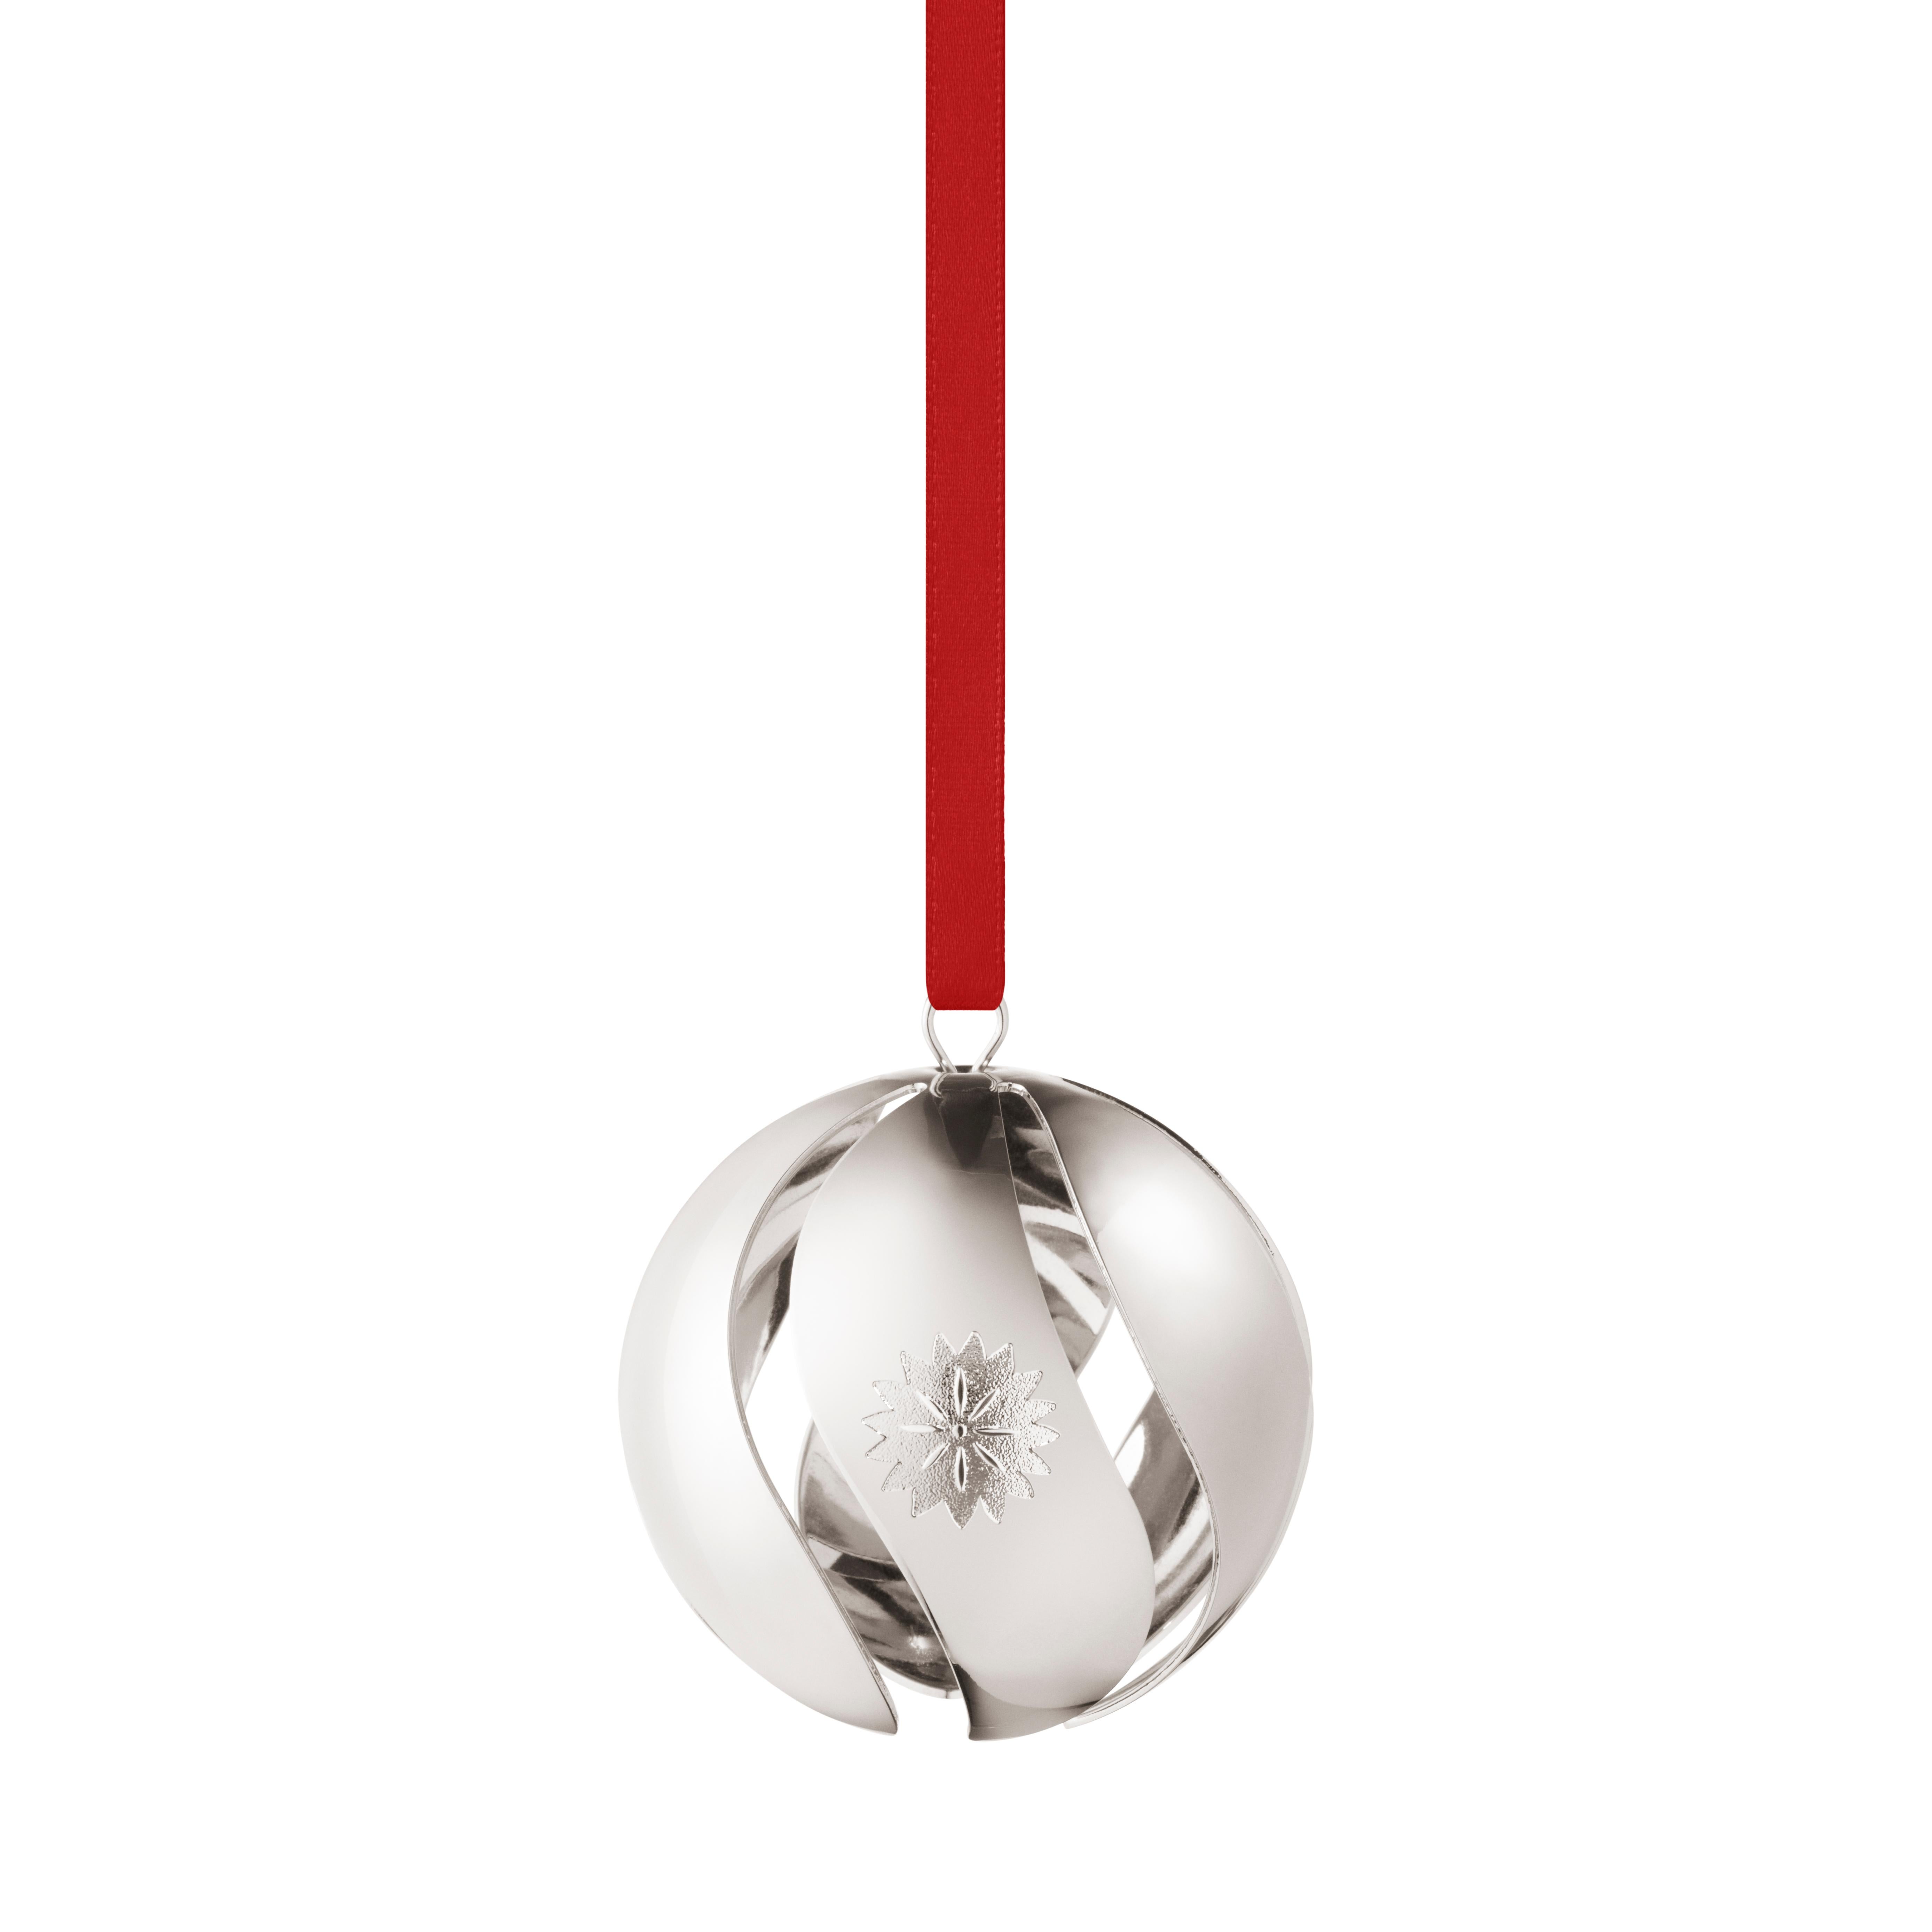 2020 Christmas Ball, palladium plated brass